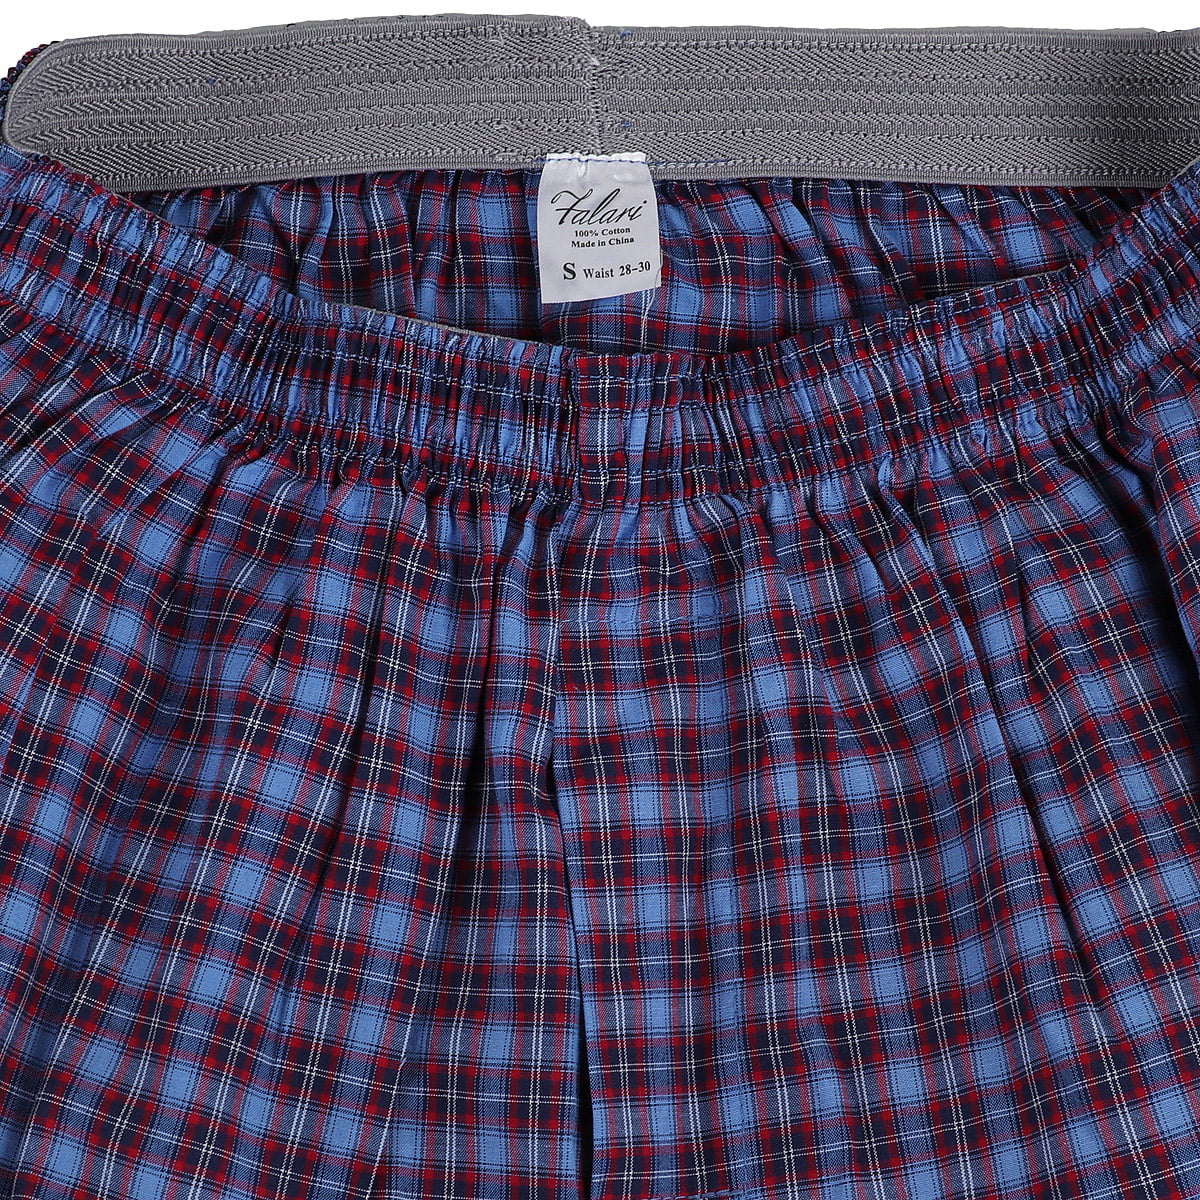 Men's Pure Cotton Boxer Pants Youth Men's Trousers - China